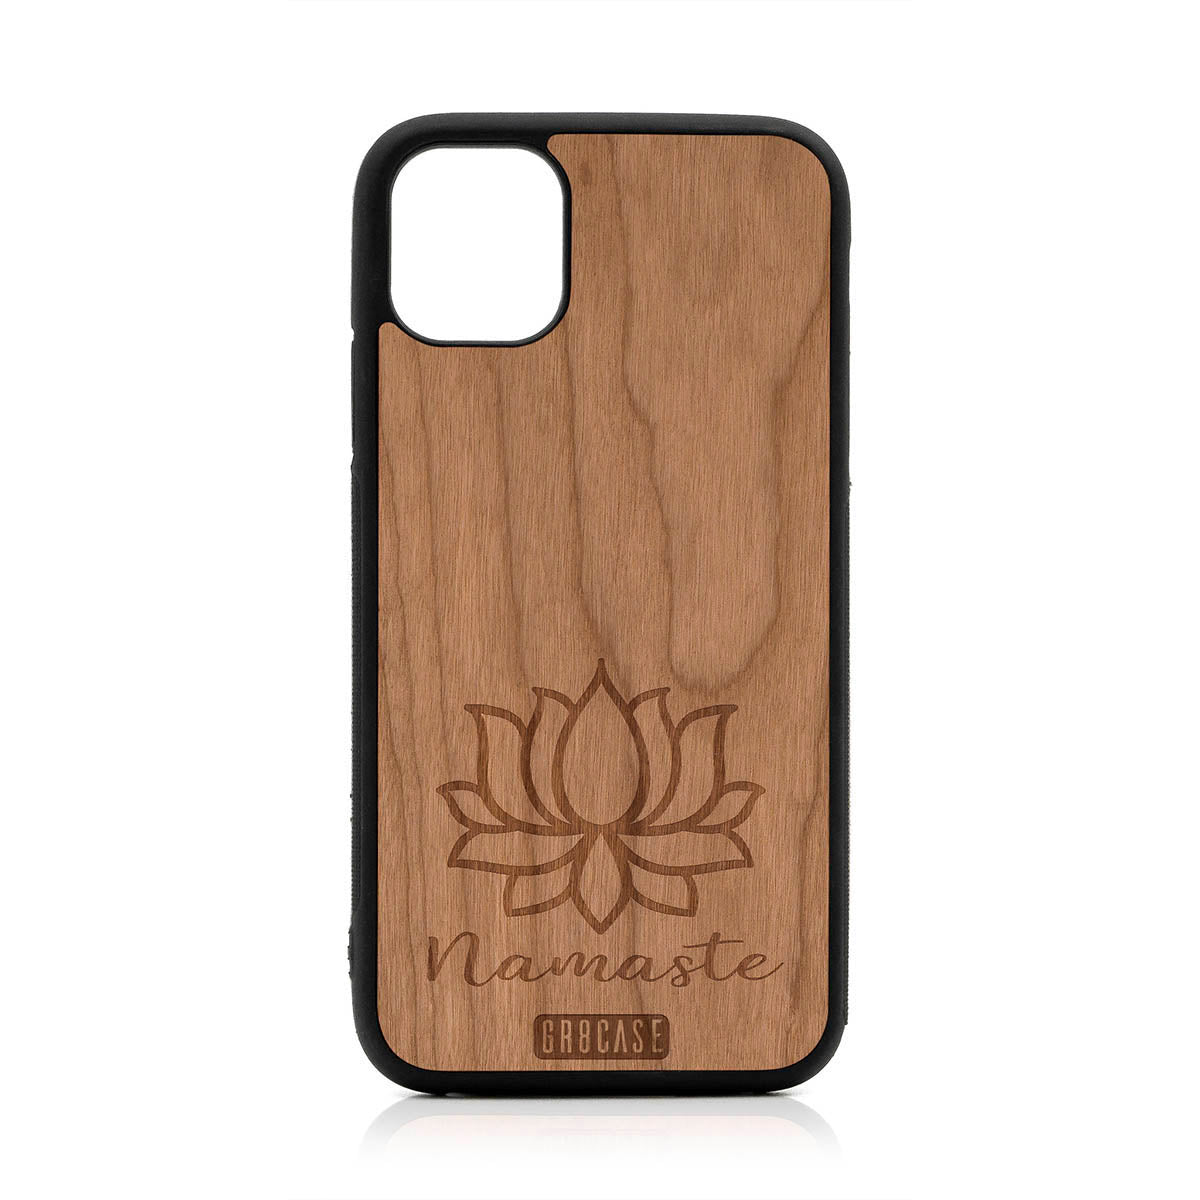 Namaste (Lotus Flower) Design Wood Case For iPhone 11